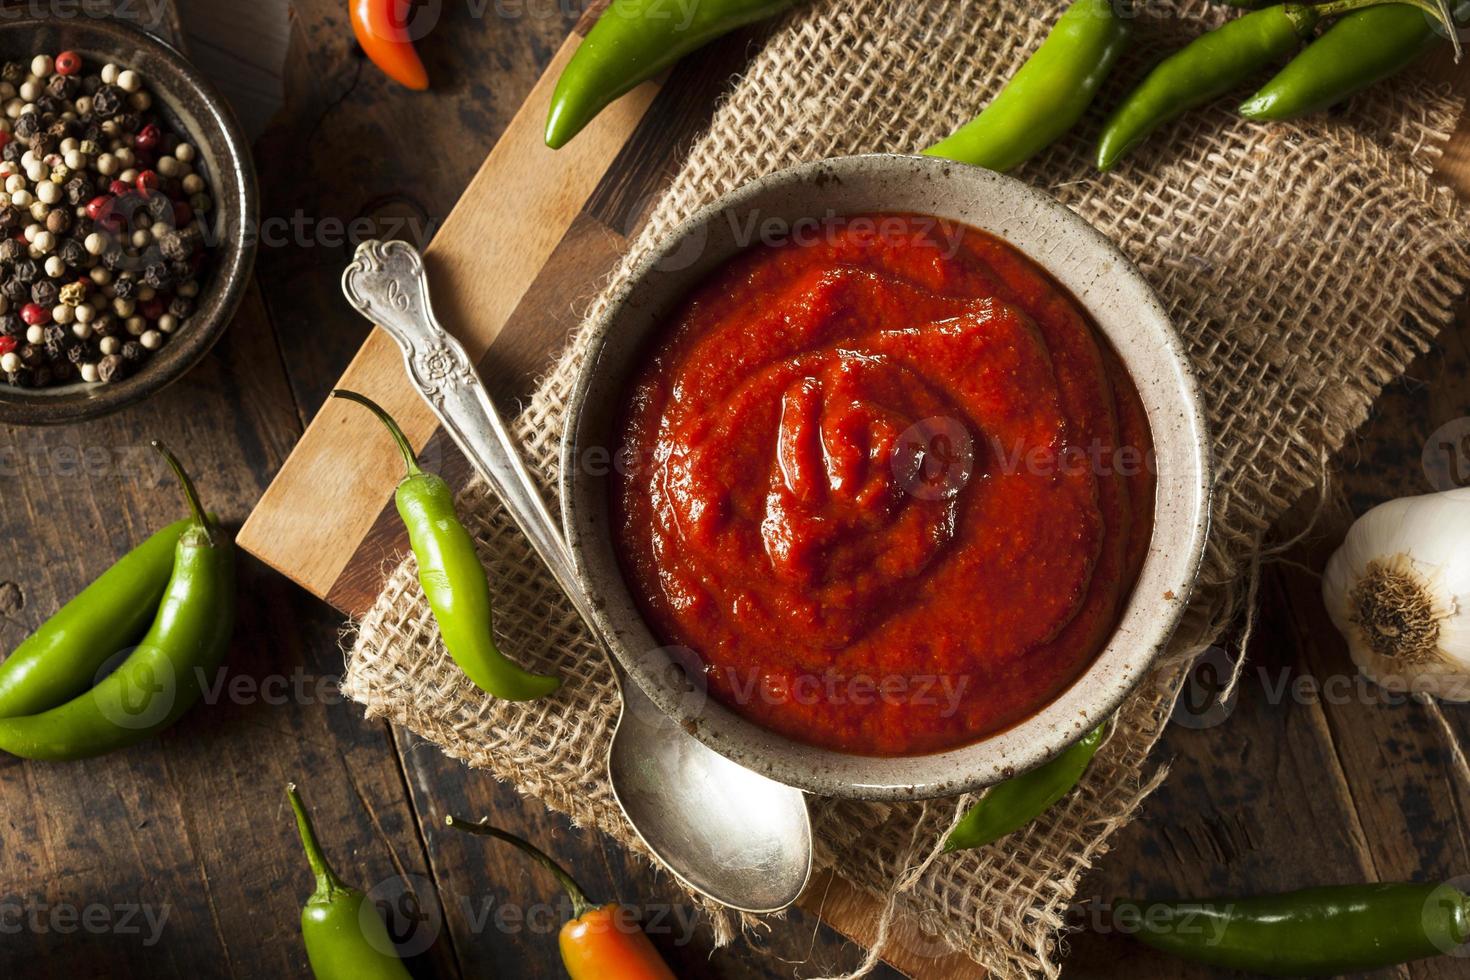 salsa piccante rossa sriracha foto